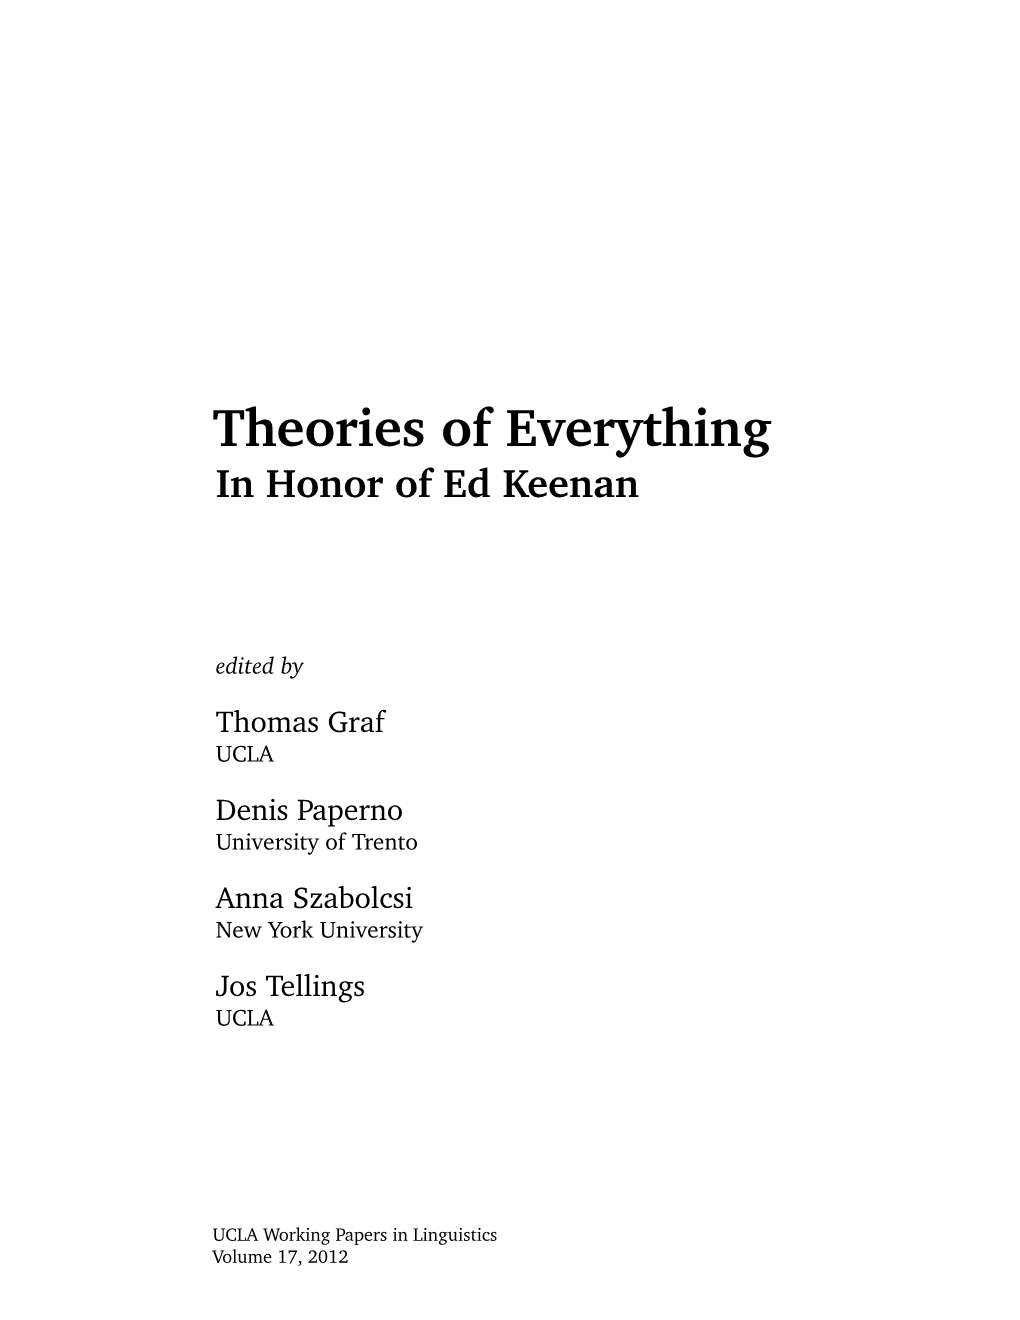 Theories of Everything in Honor of Ed Keenan